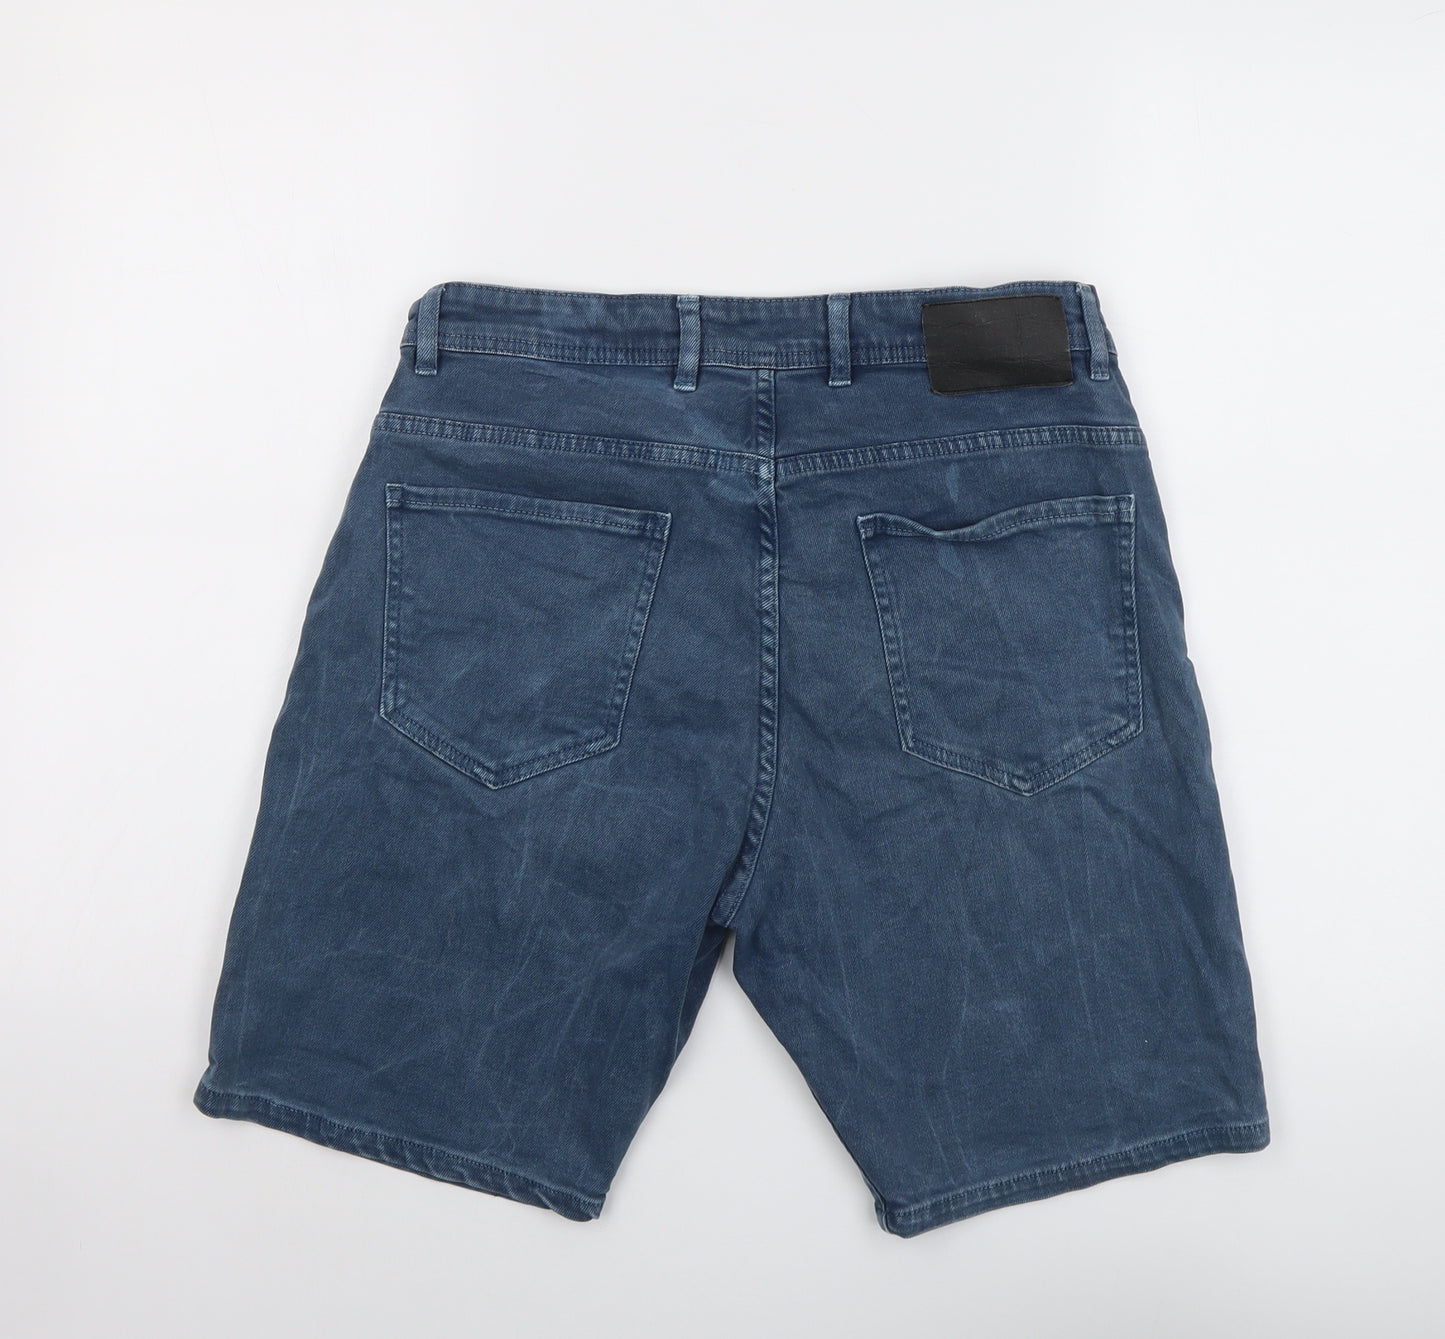 Zara Mens Blue Cotton Chino Shorts Size 34 in L9 in Regular Button